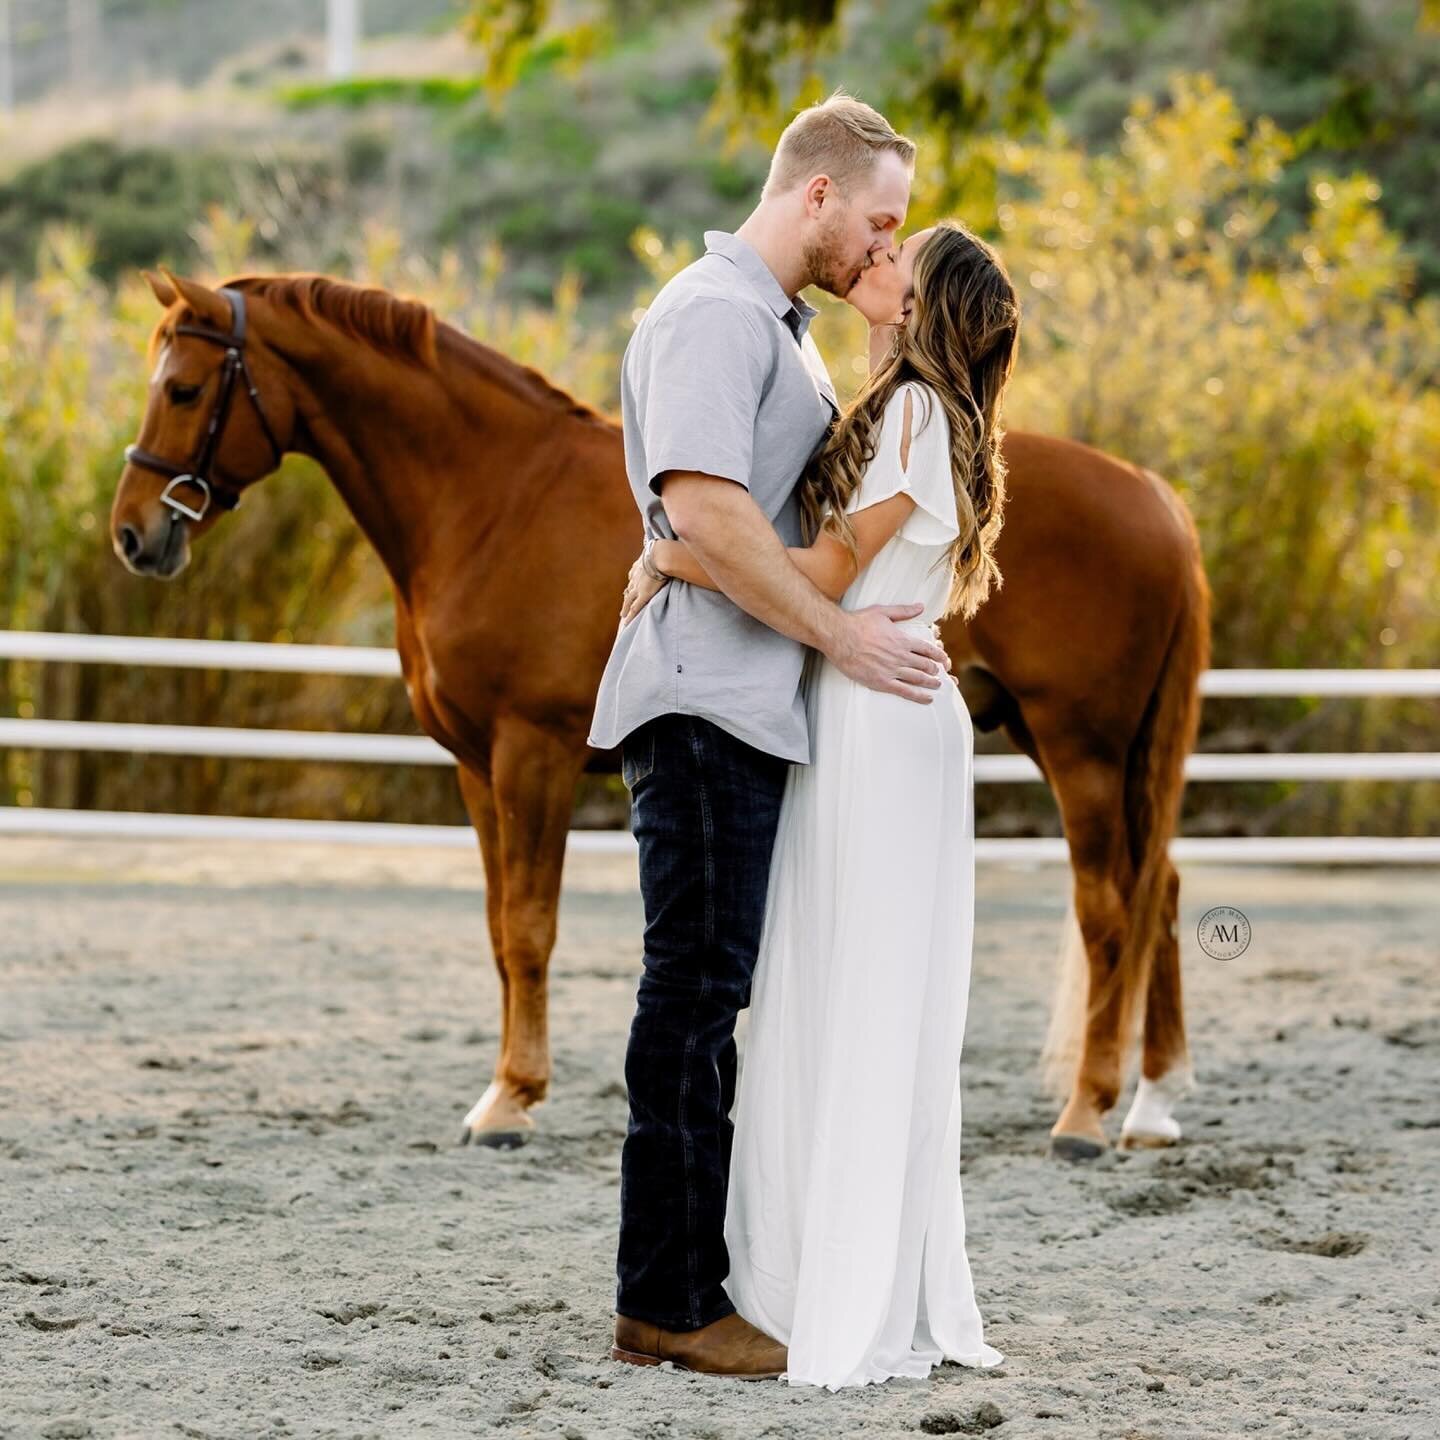 Engagement Era, but Make it Equestrian 🖤